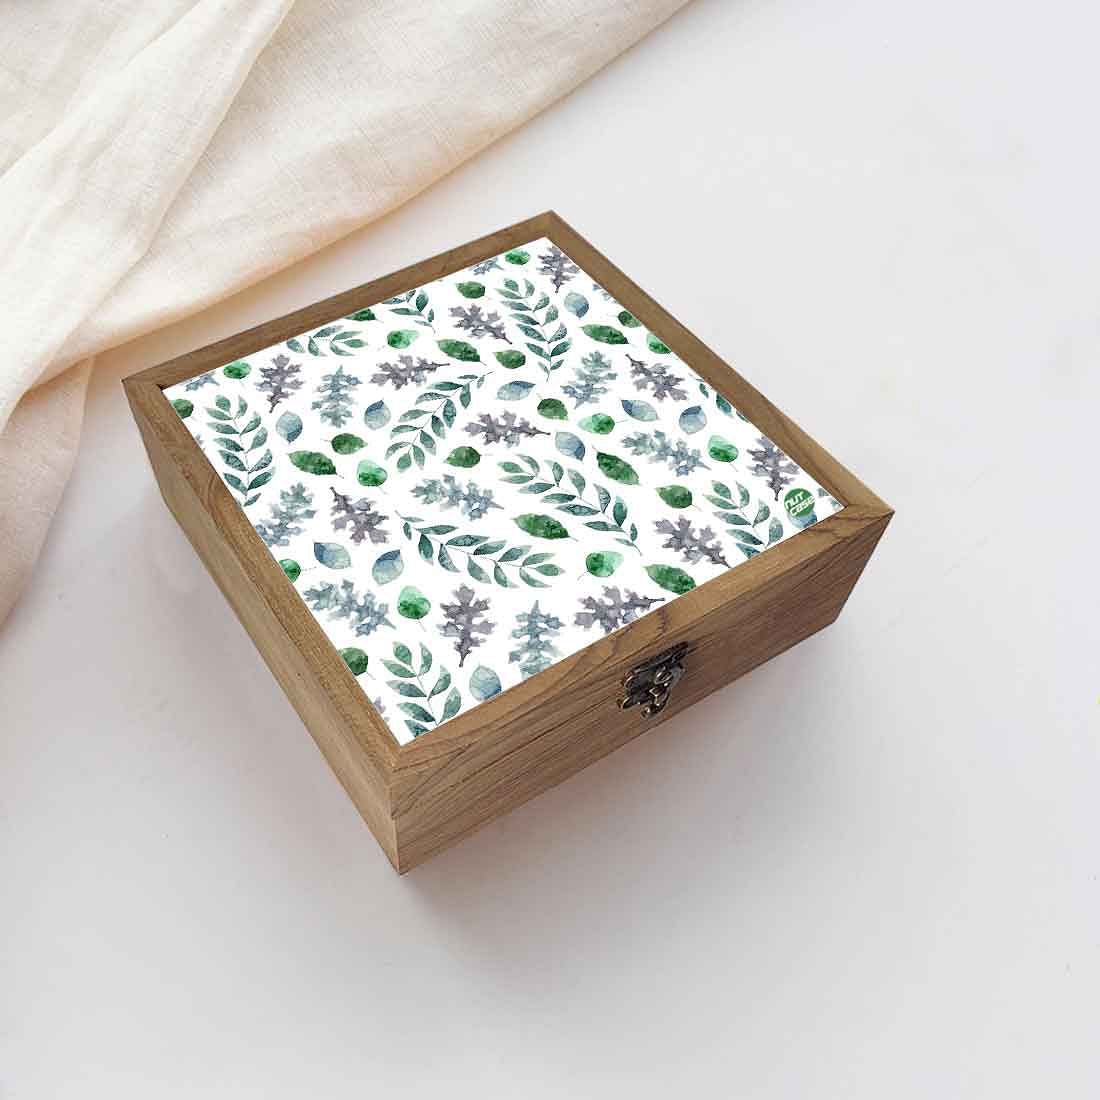 Nutcase Jewellery Box for Women Latest Design fancy - Unique Gifts -Green Leaf Nutcase